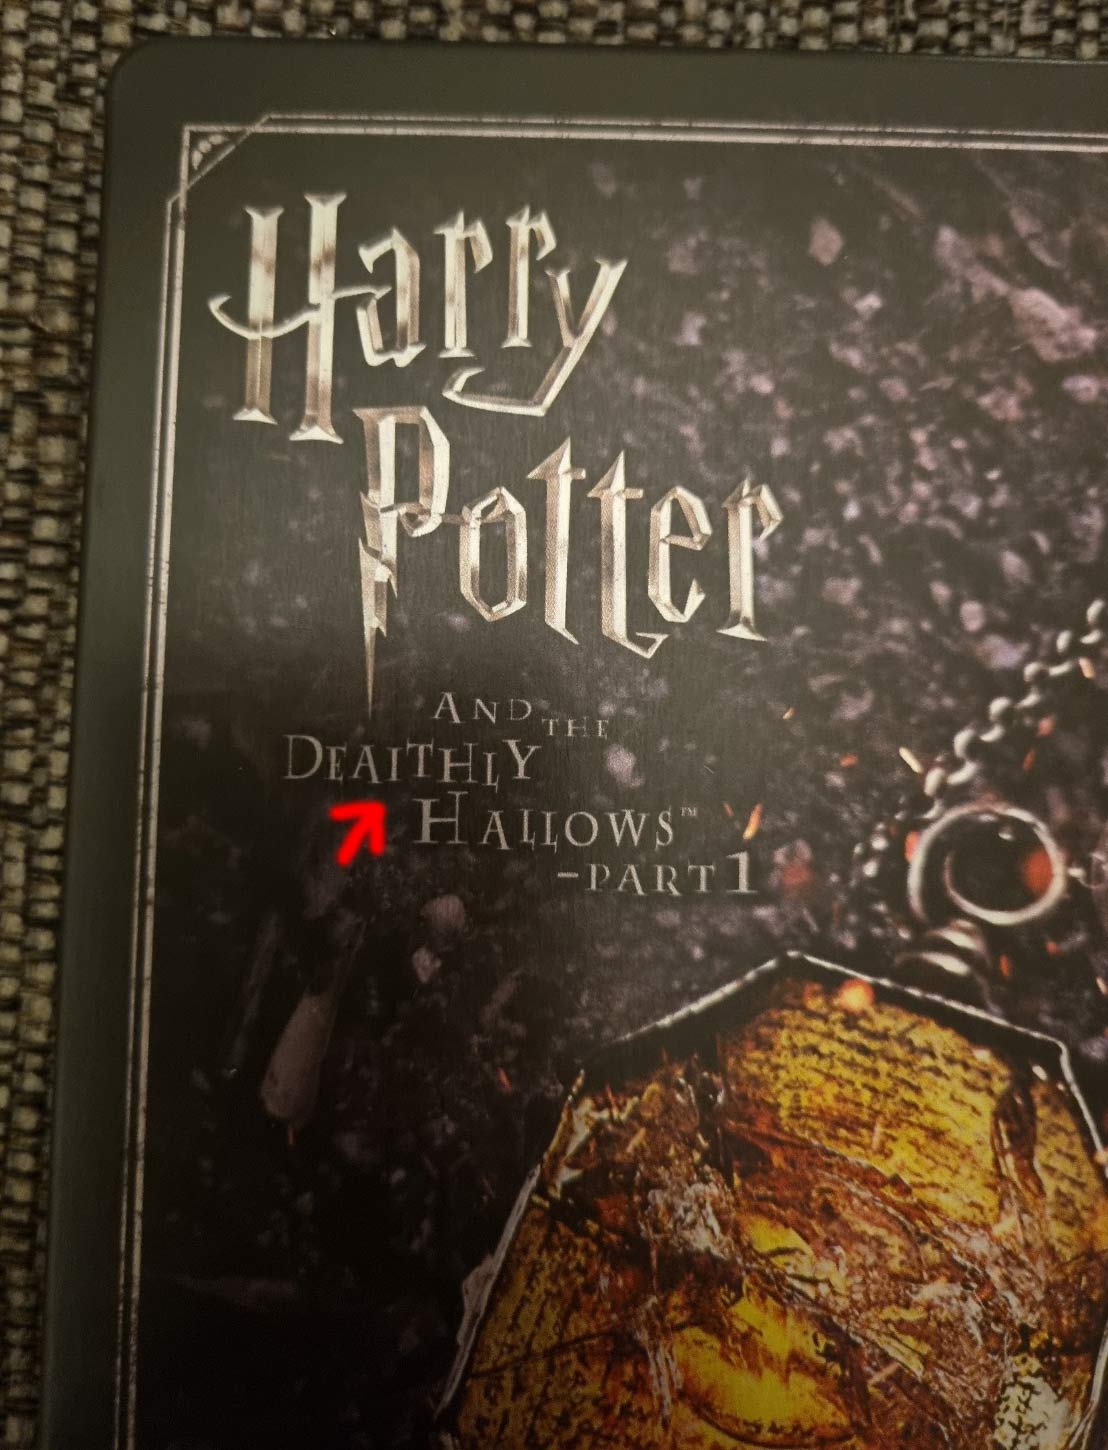 Harry Potter L'integrale Steelbookblu-ray